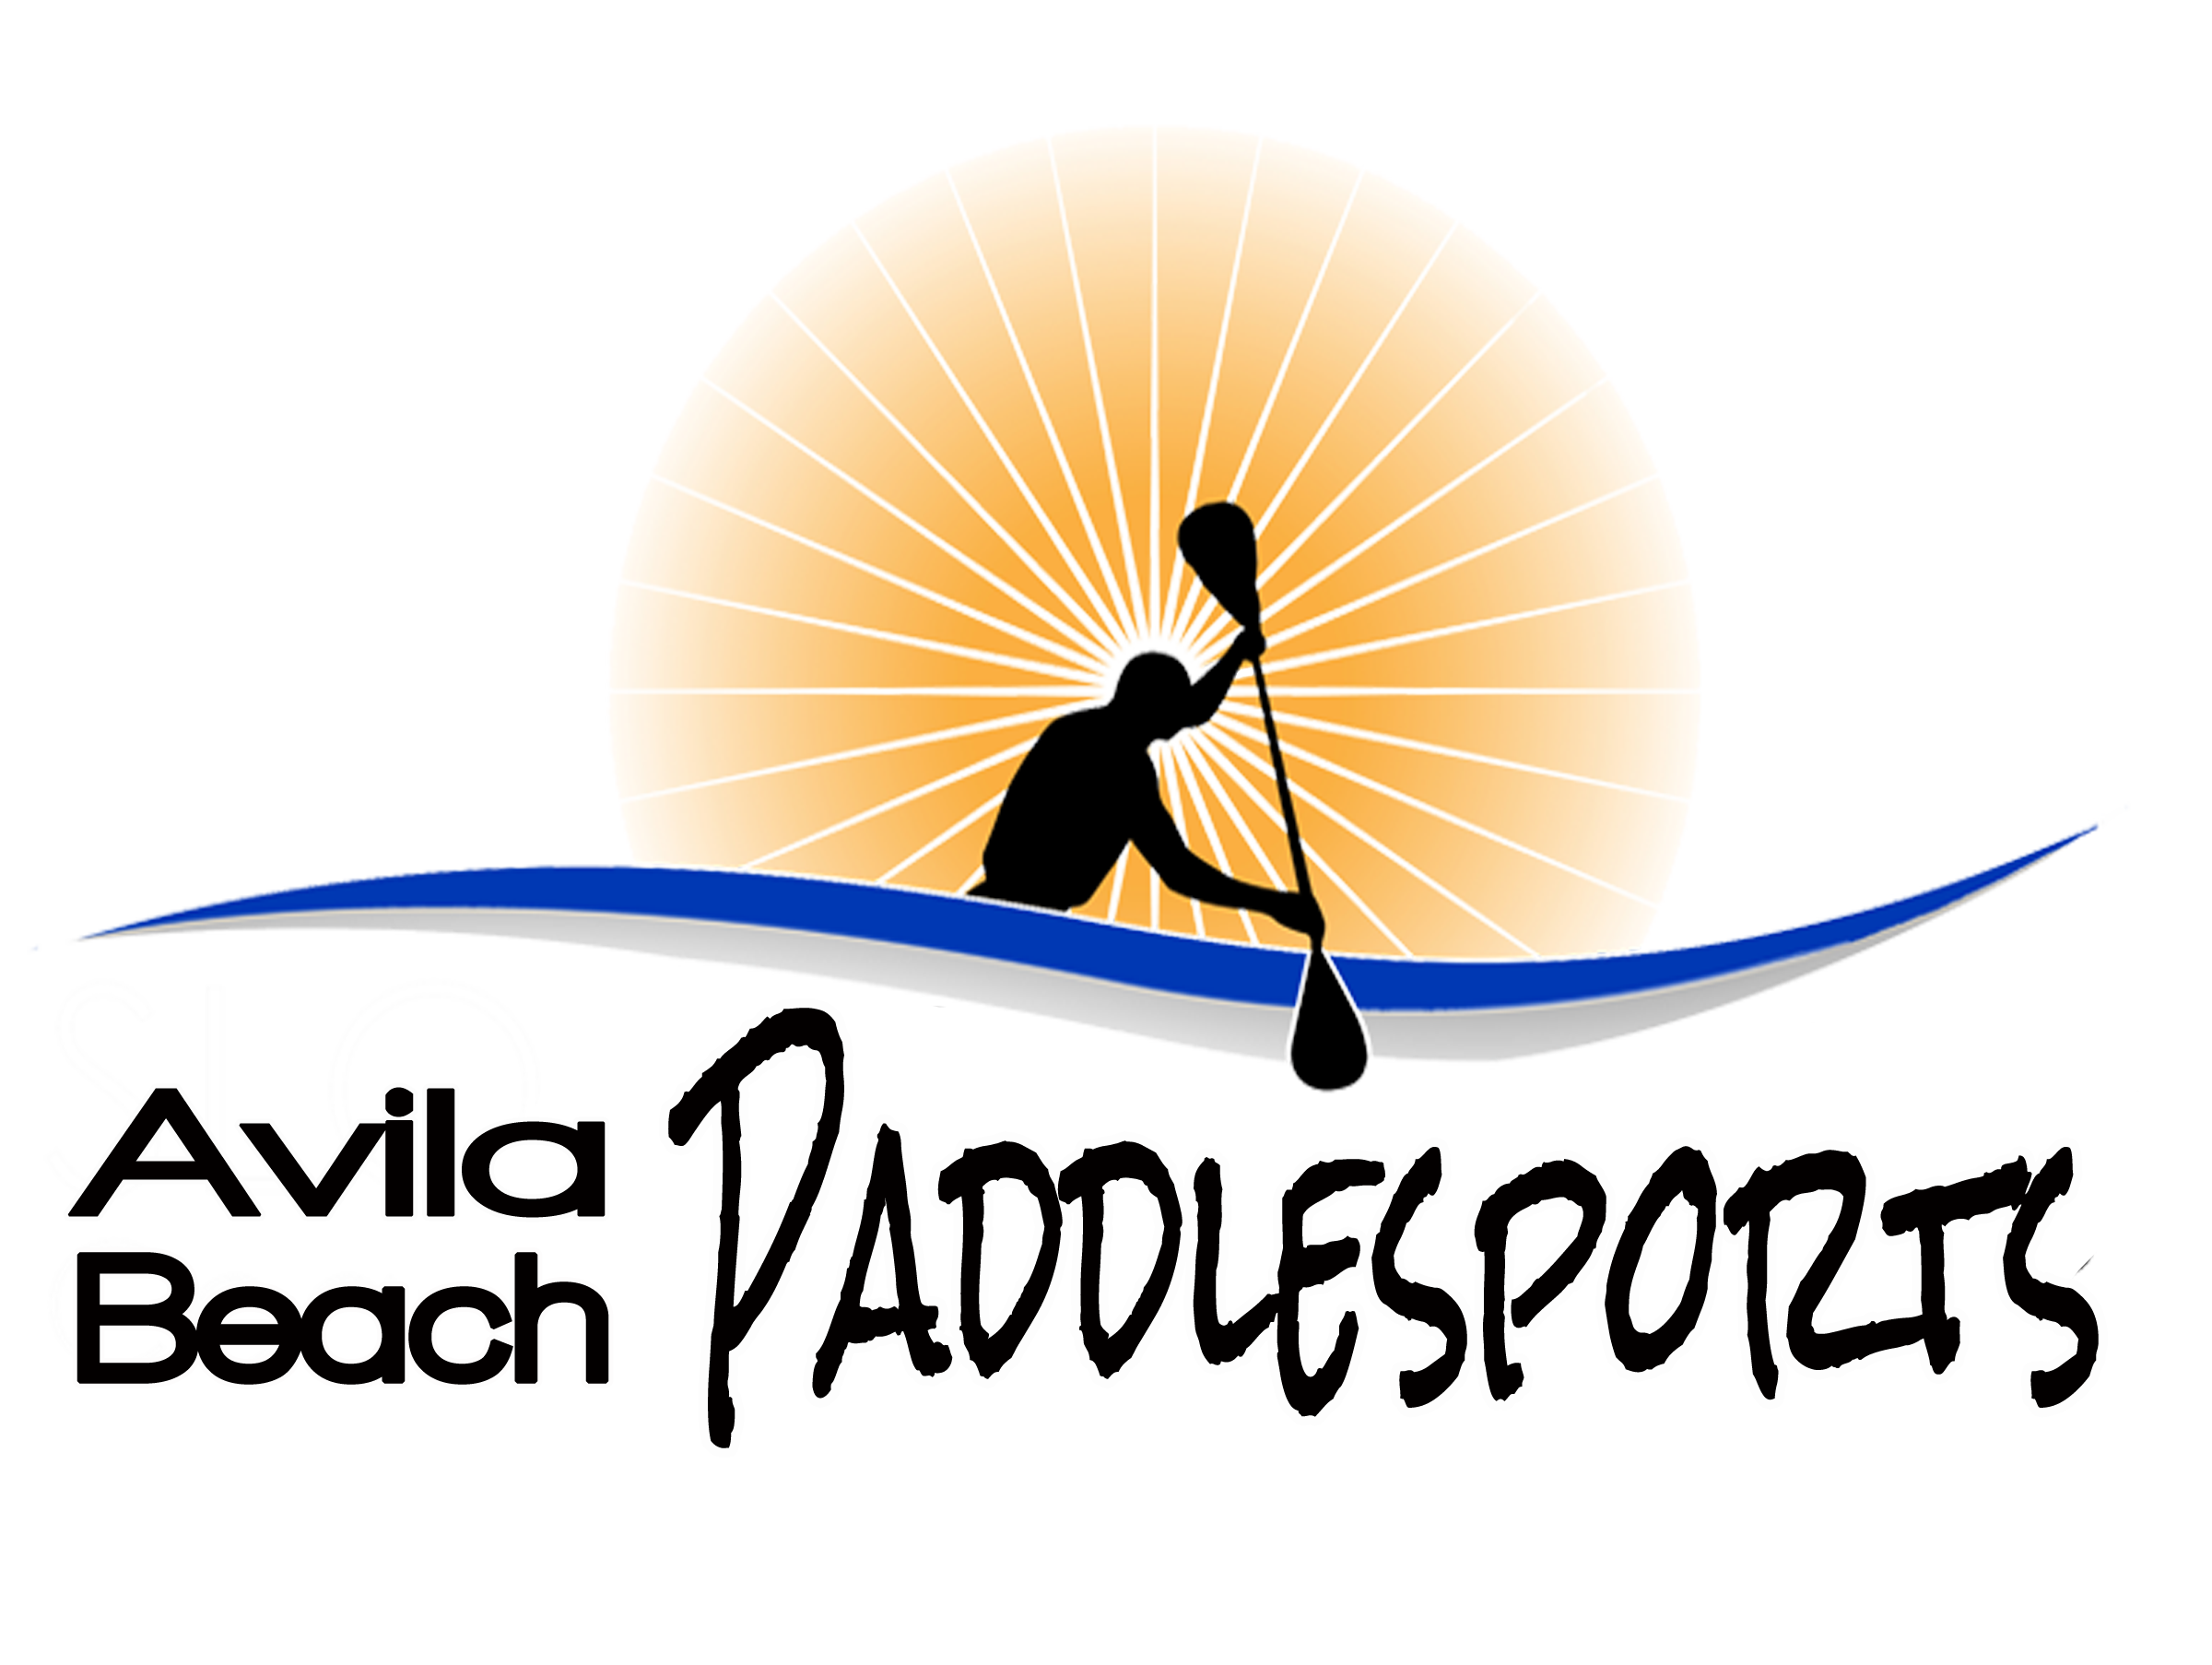 Avila Beach Paddlesports